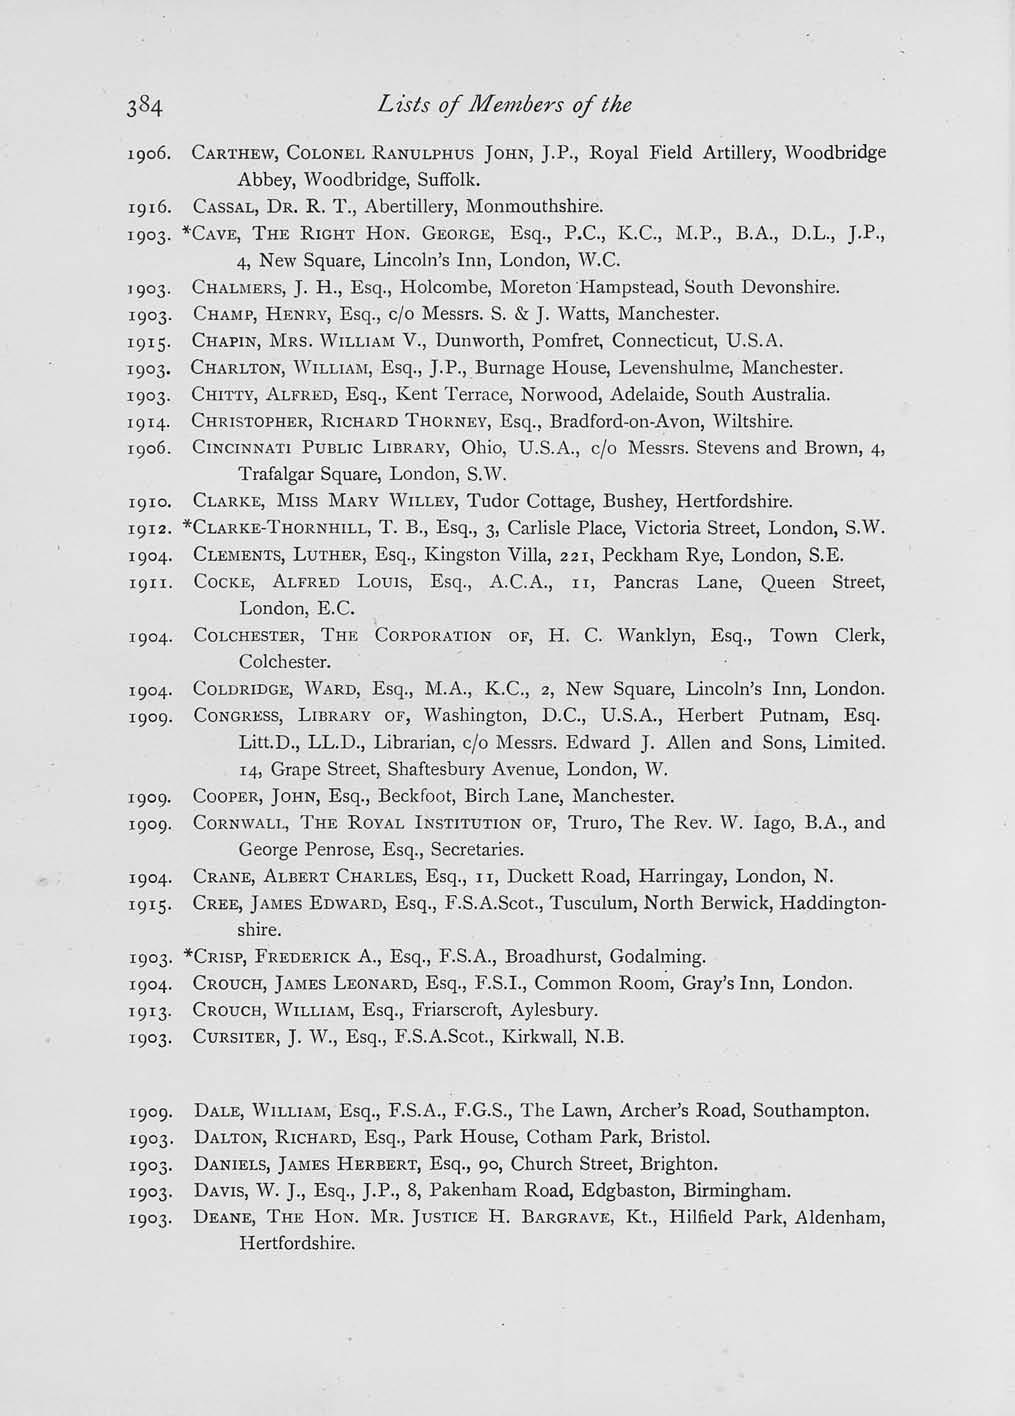 Lists of Members of the 1906. CARTHEW, COLONEL RANULPHUS JOHN, J.P., Royal Field Artillery, Woodbridge Abbey, Woodbridge, Suffolk. 1916. CASSAL, DR. R. T., Abertillery, Monmouthshire. 1903.